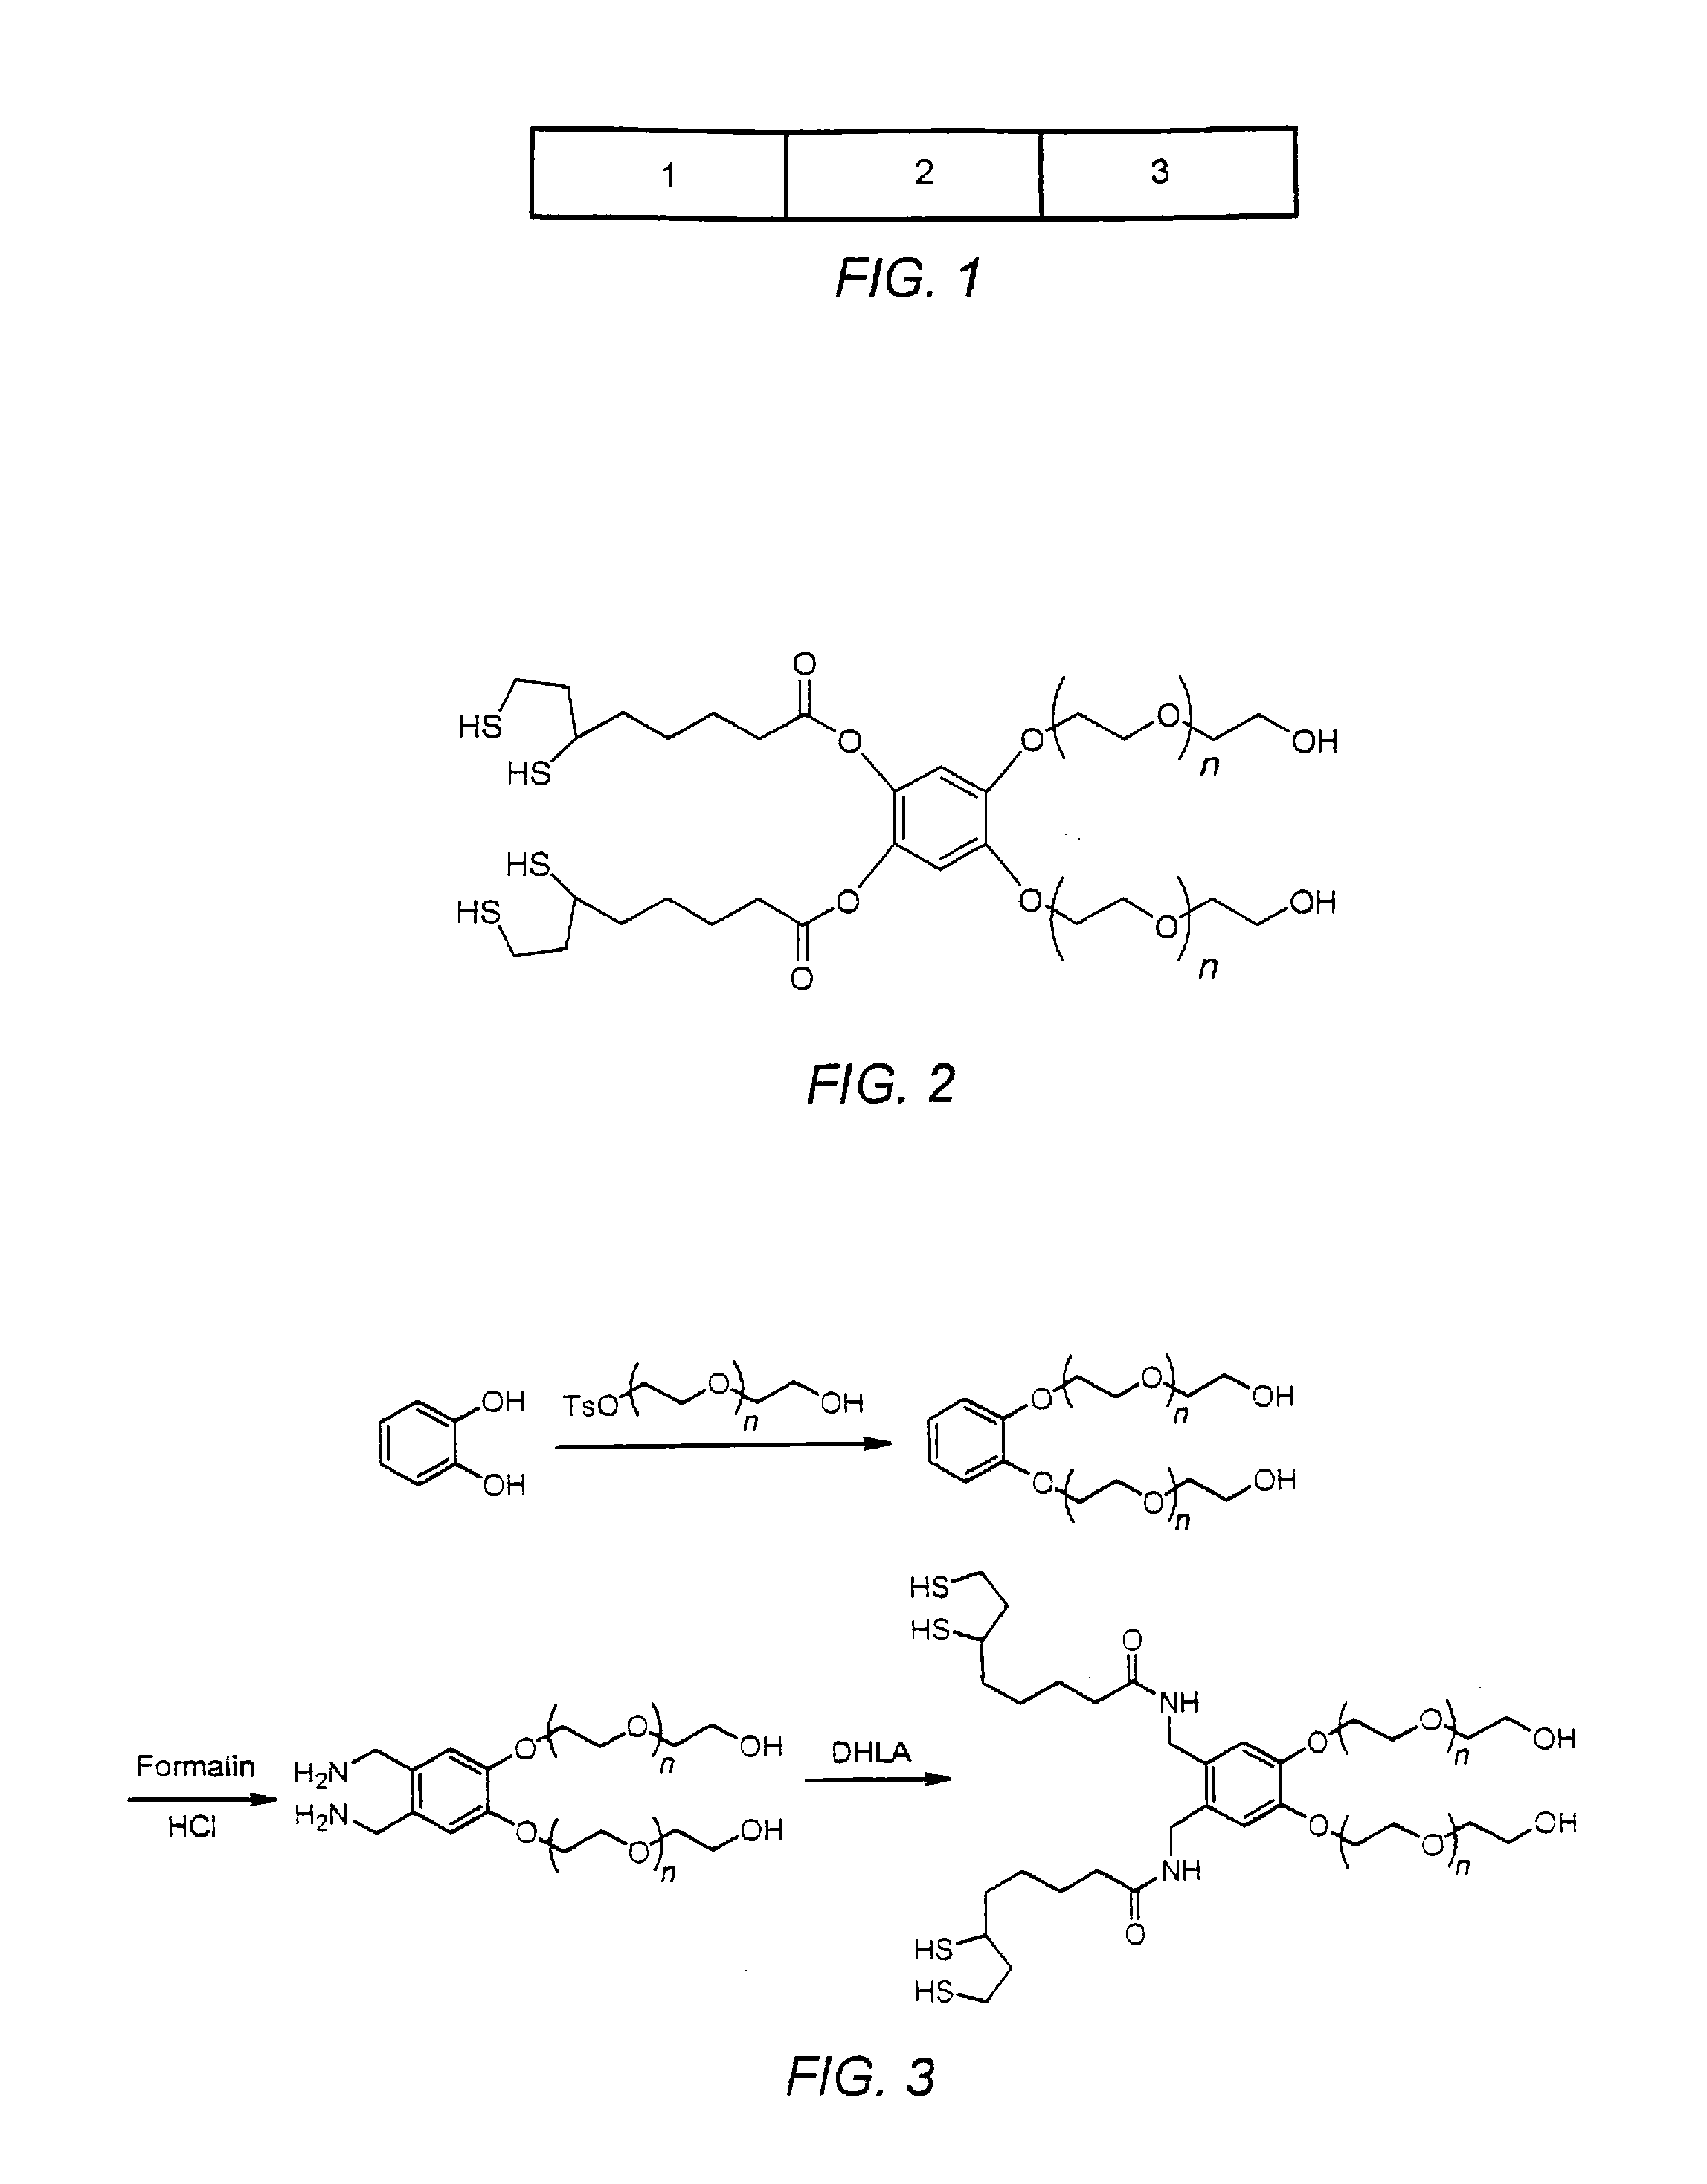 Field of modular multifunctional ligands